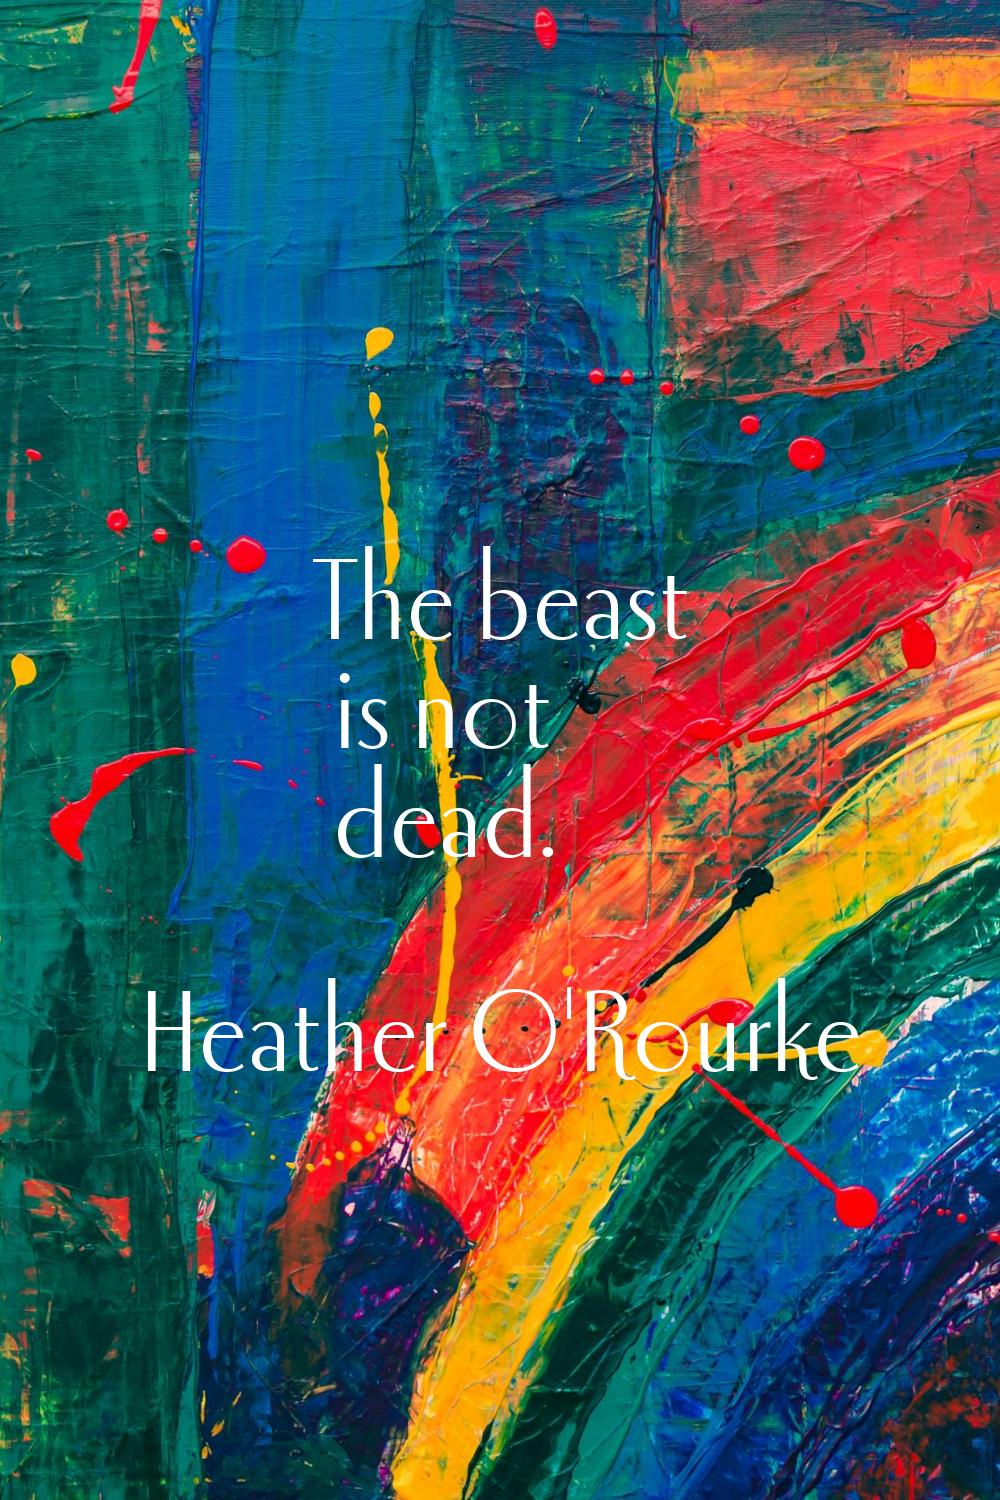 The beast is not dead.